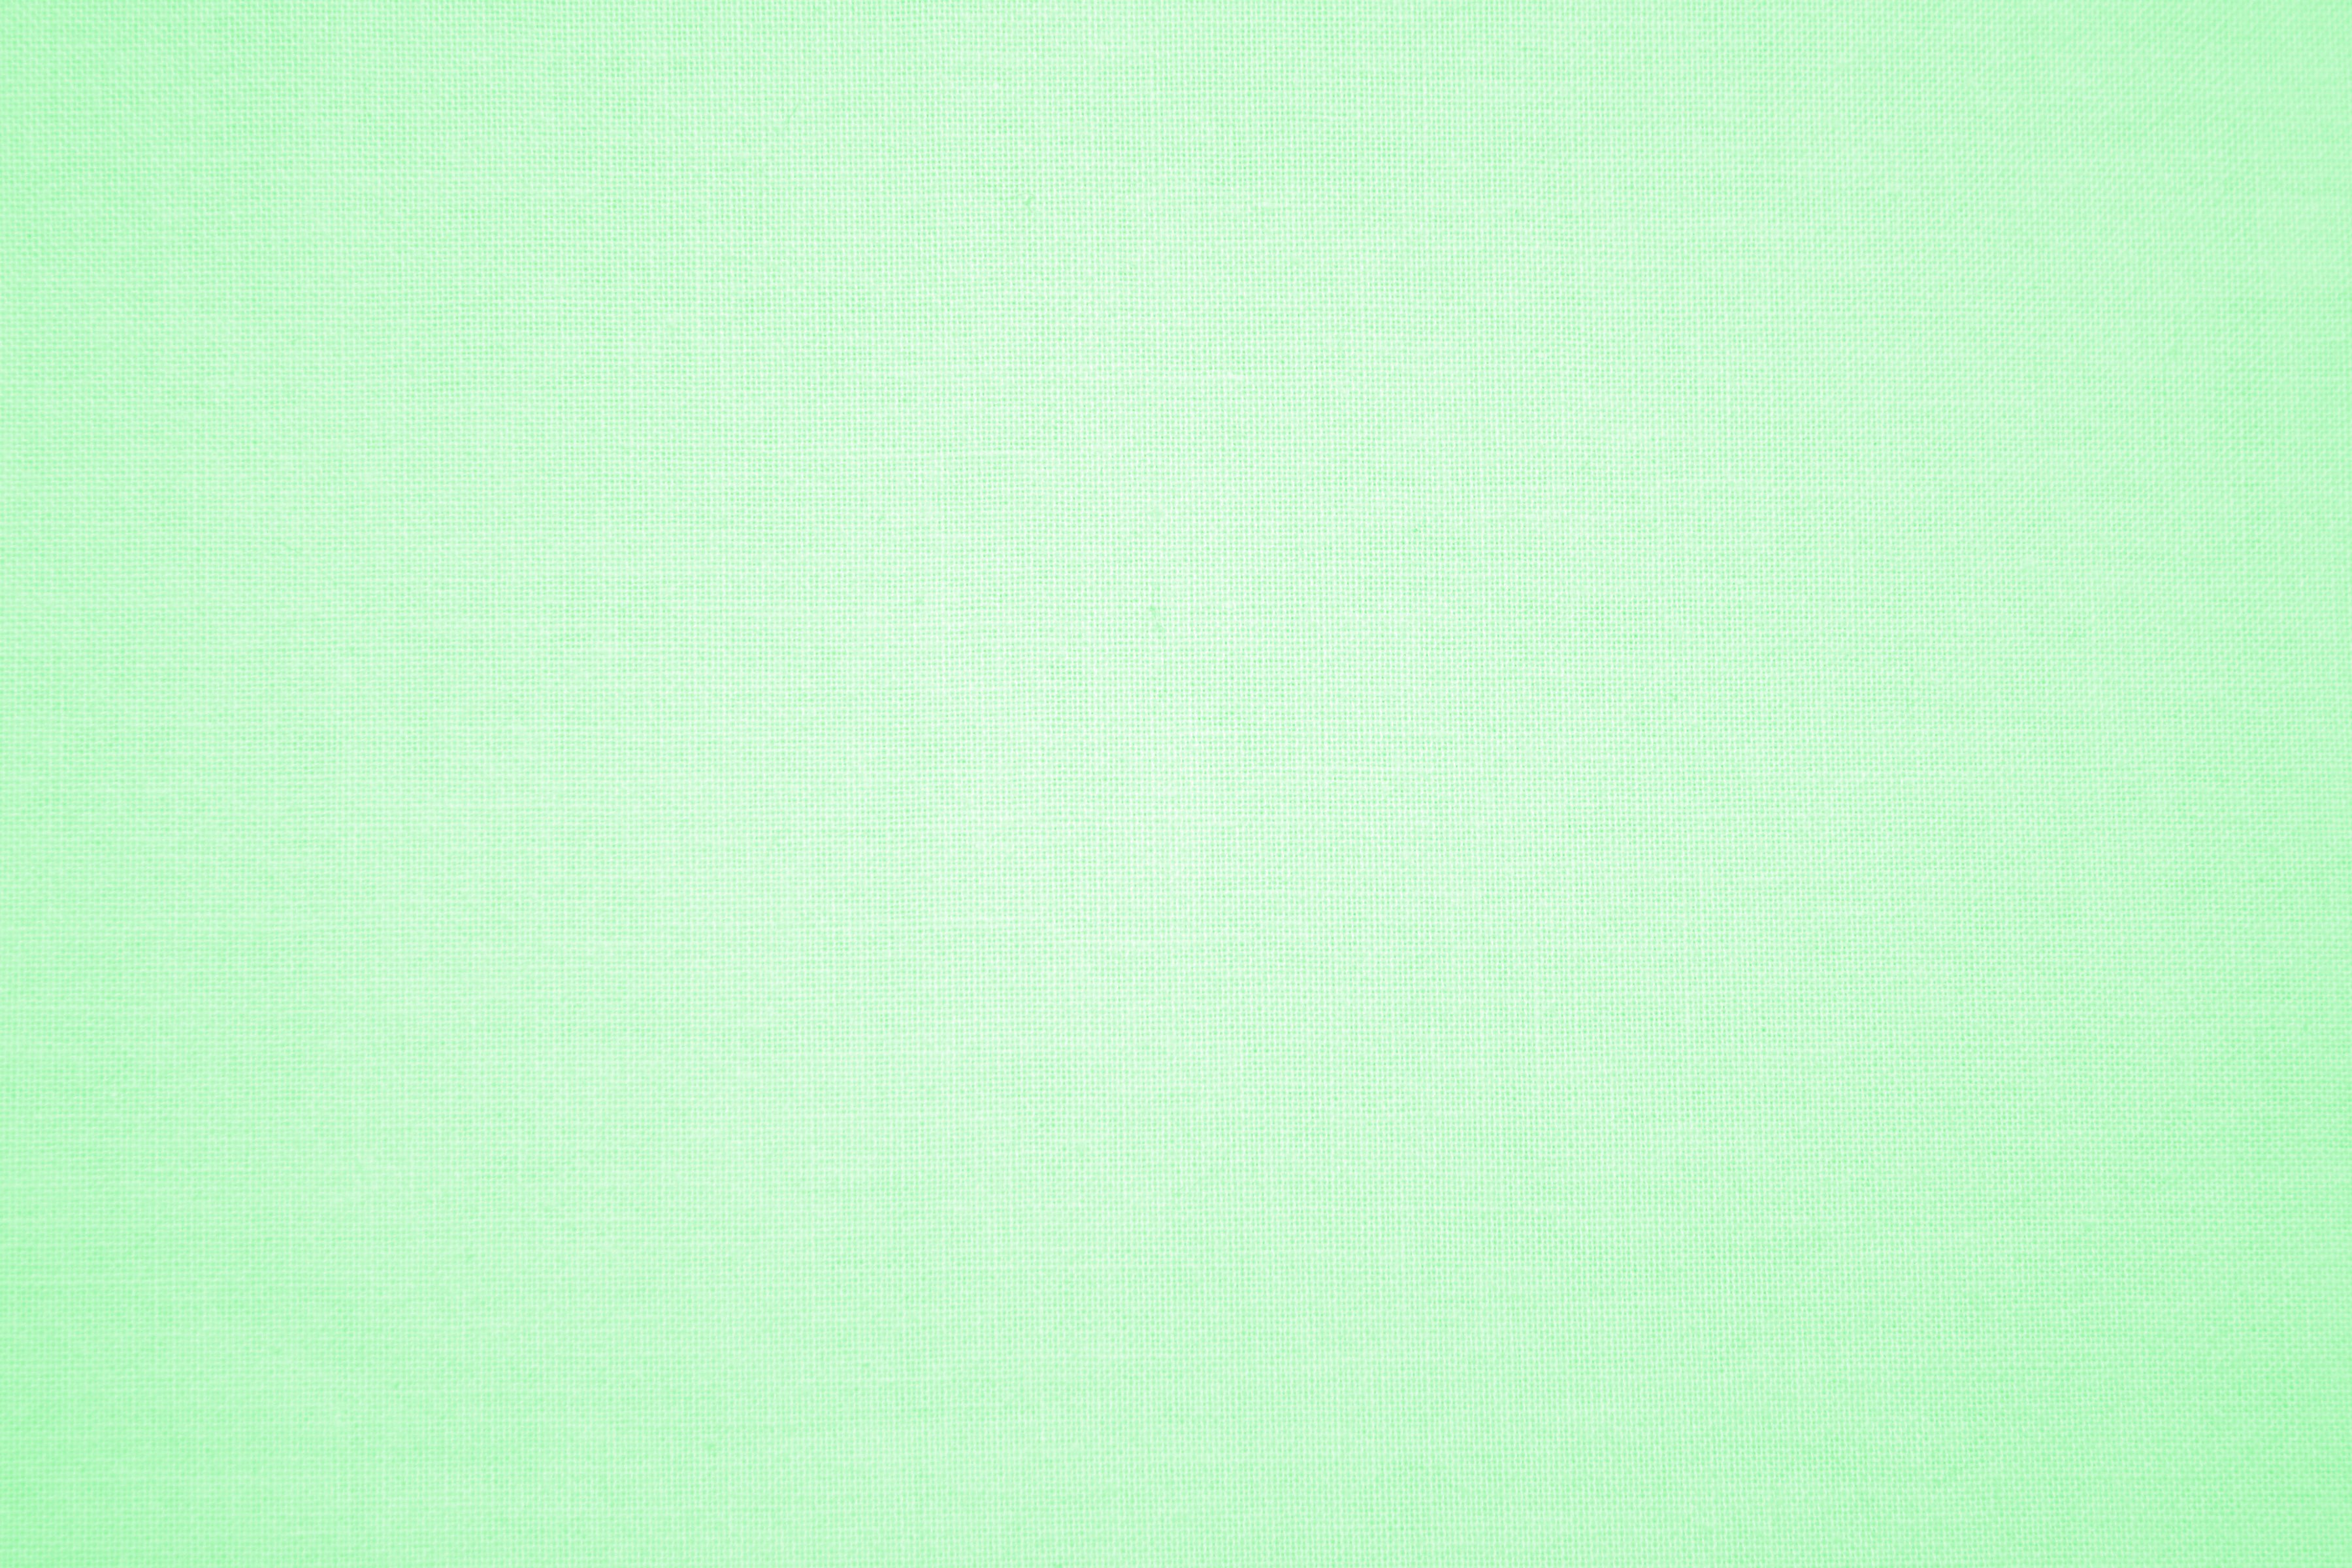 Pastel Green Canvas Fabric Texture Picture | Free Photograph | Photos  Public Domain